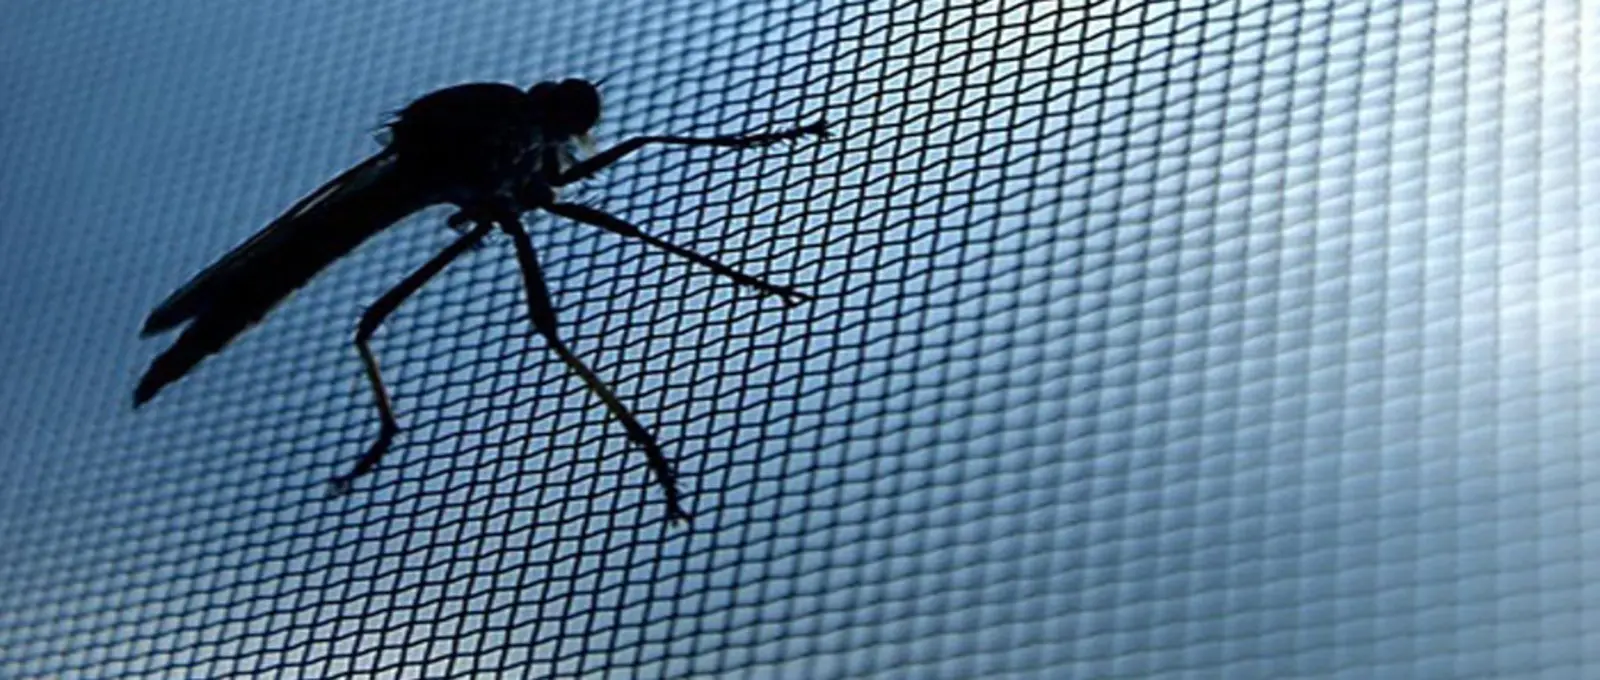 Smart Mosquito Net - Pest Control in Chennai Citymapia.com.